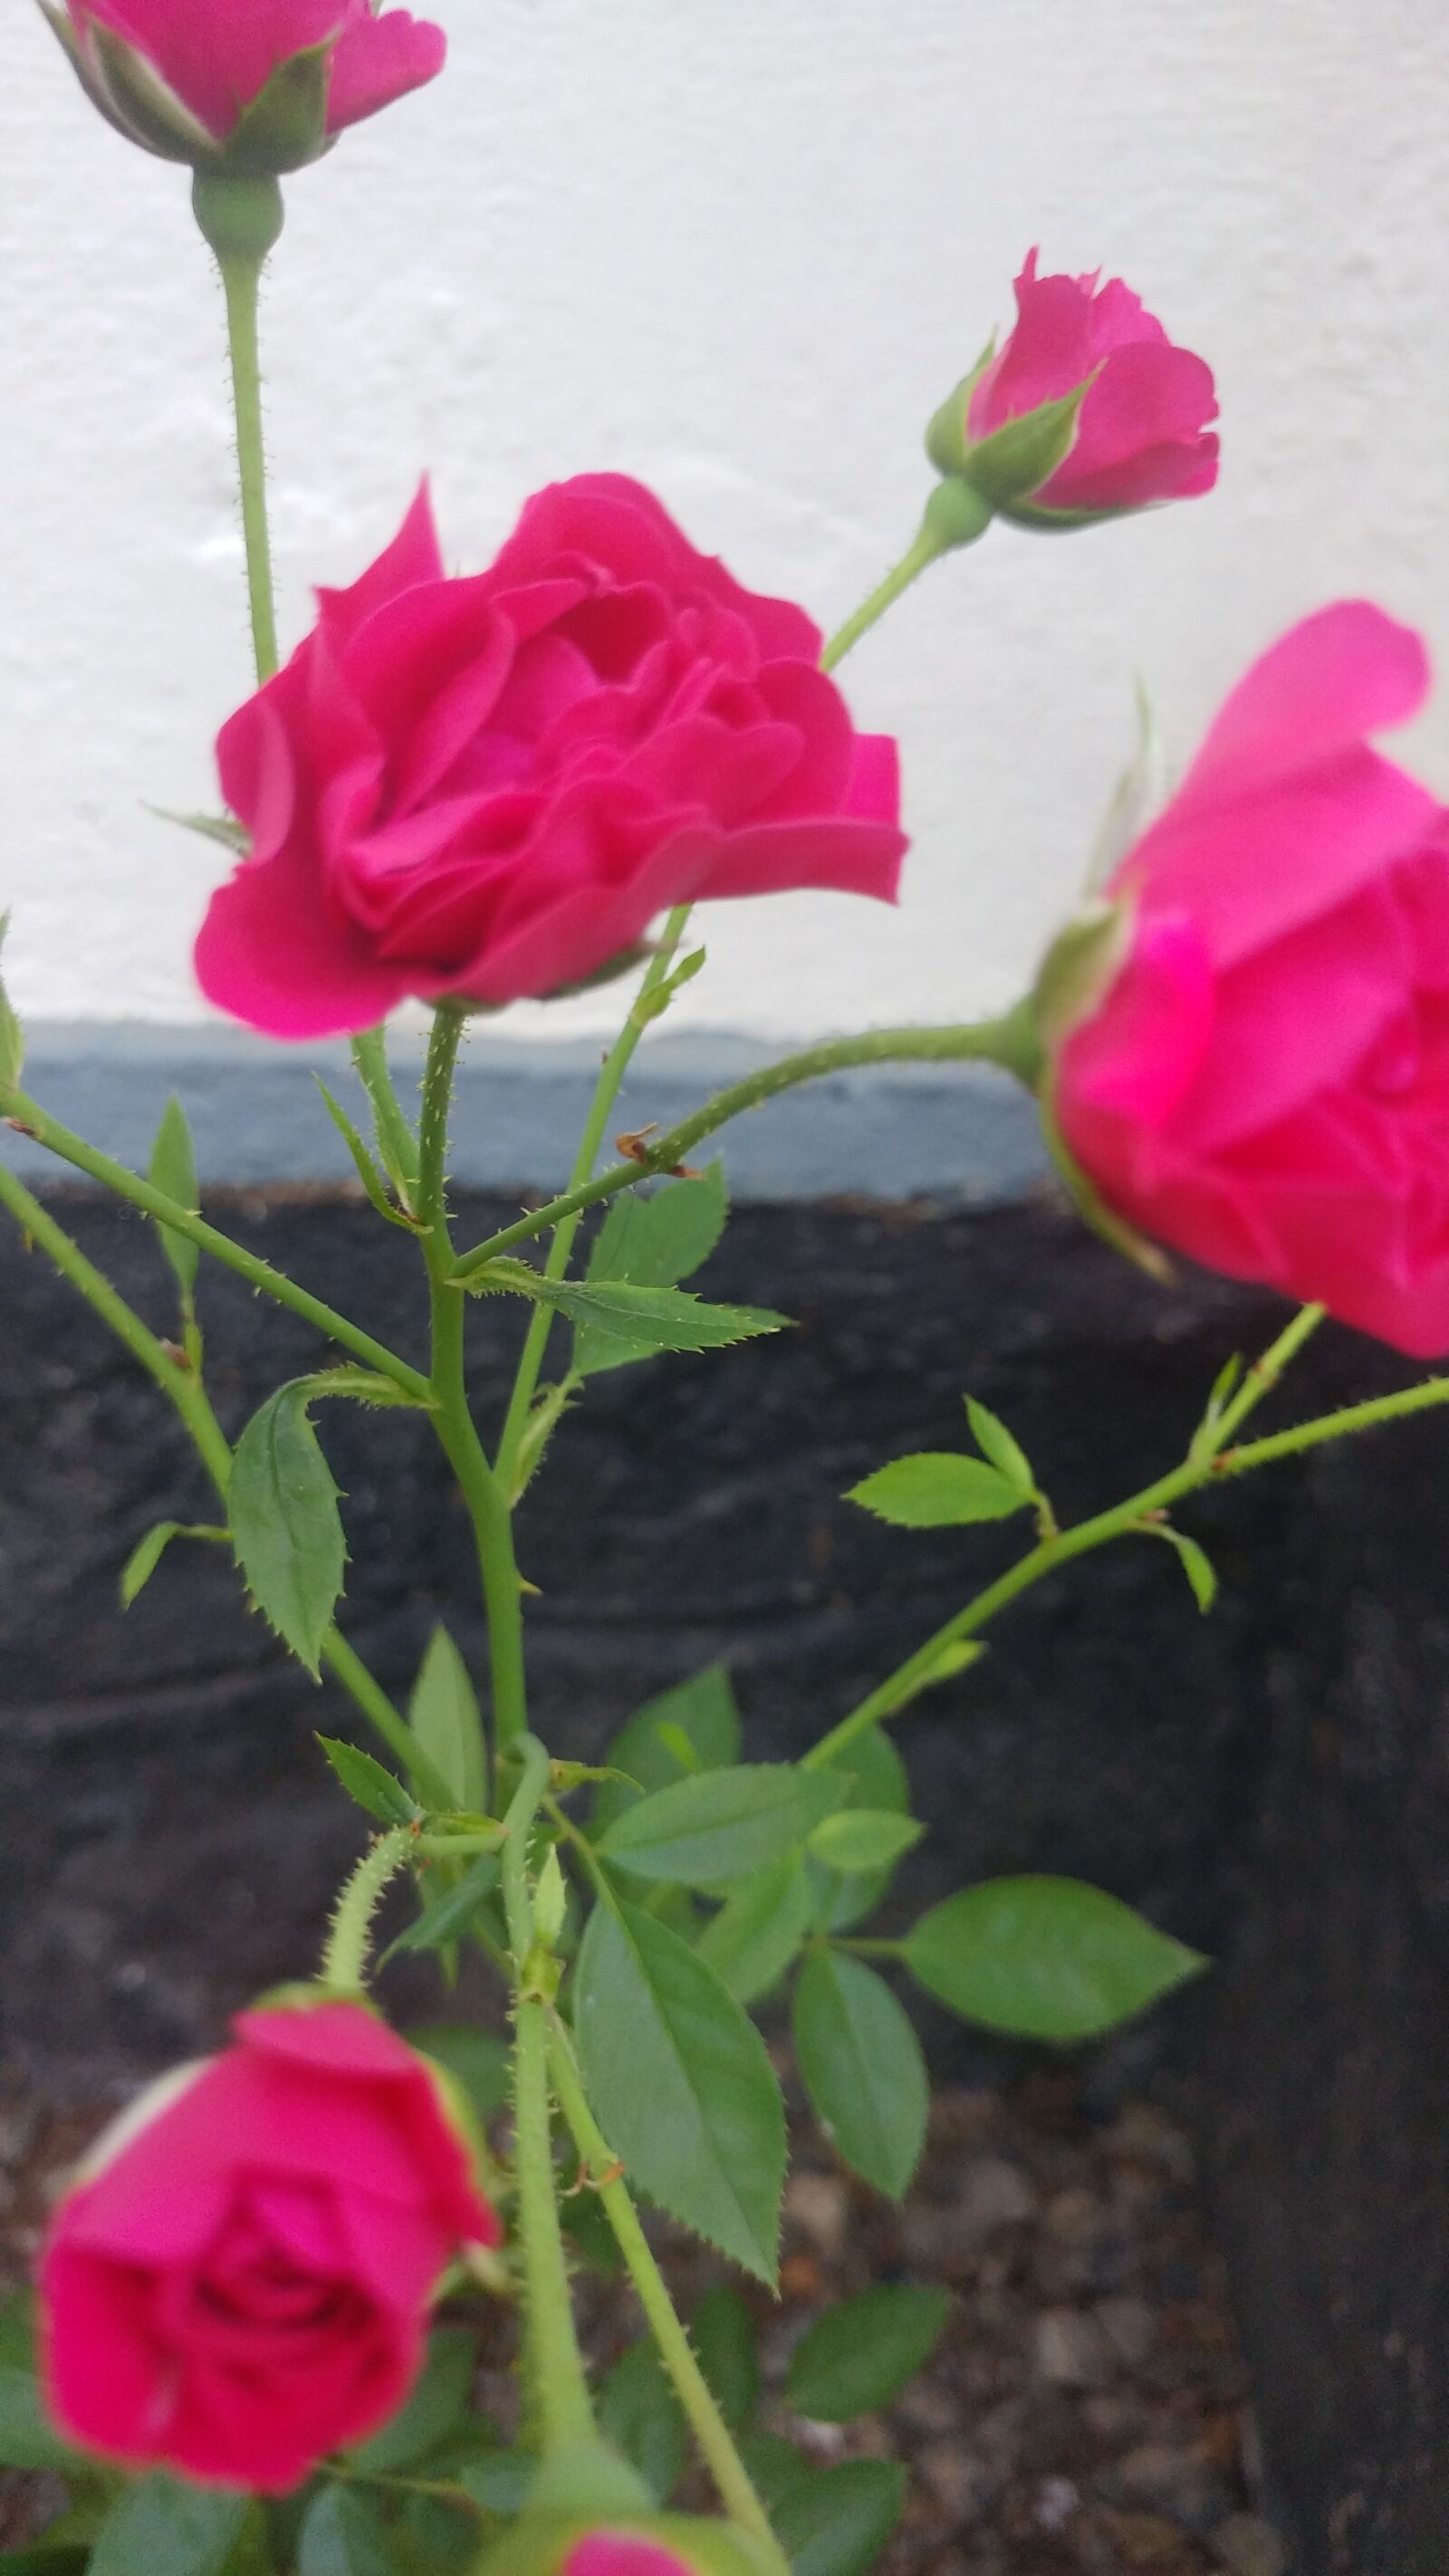 LG G5 SE sample photo. Plant, flowers, roses photography